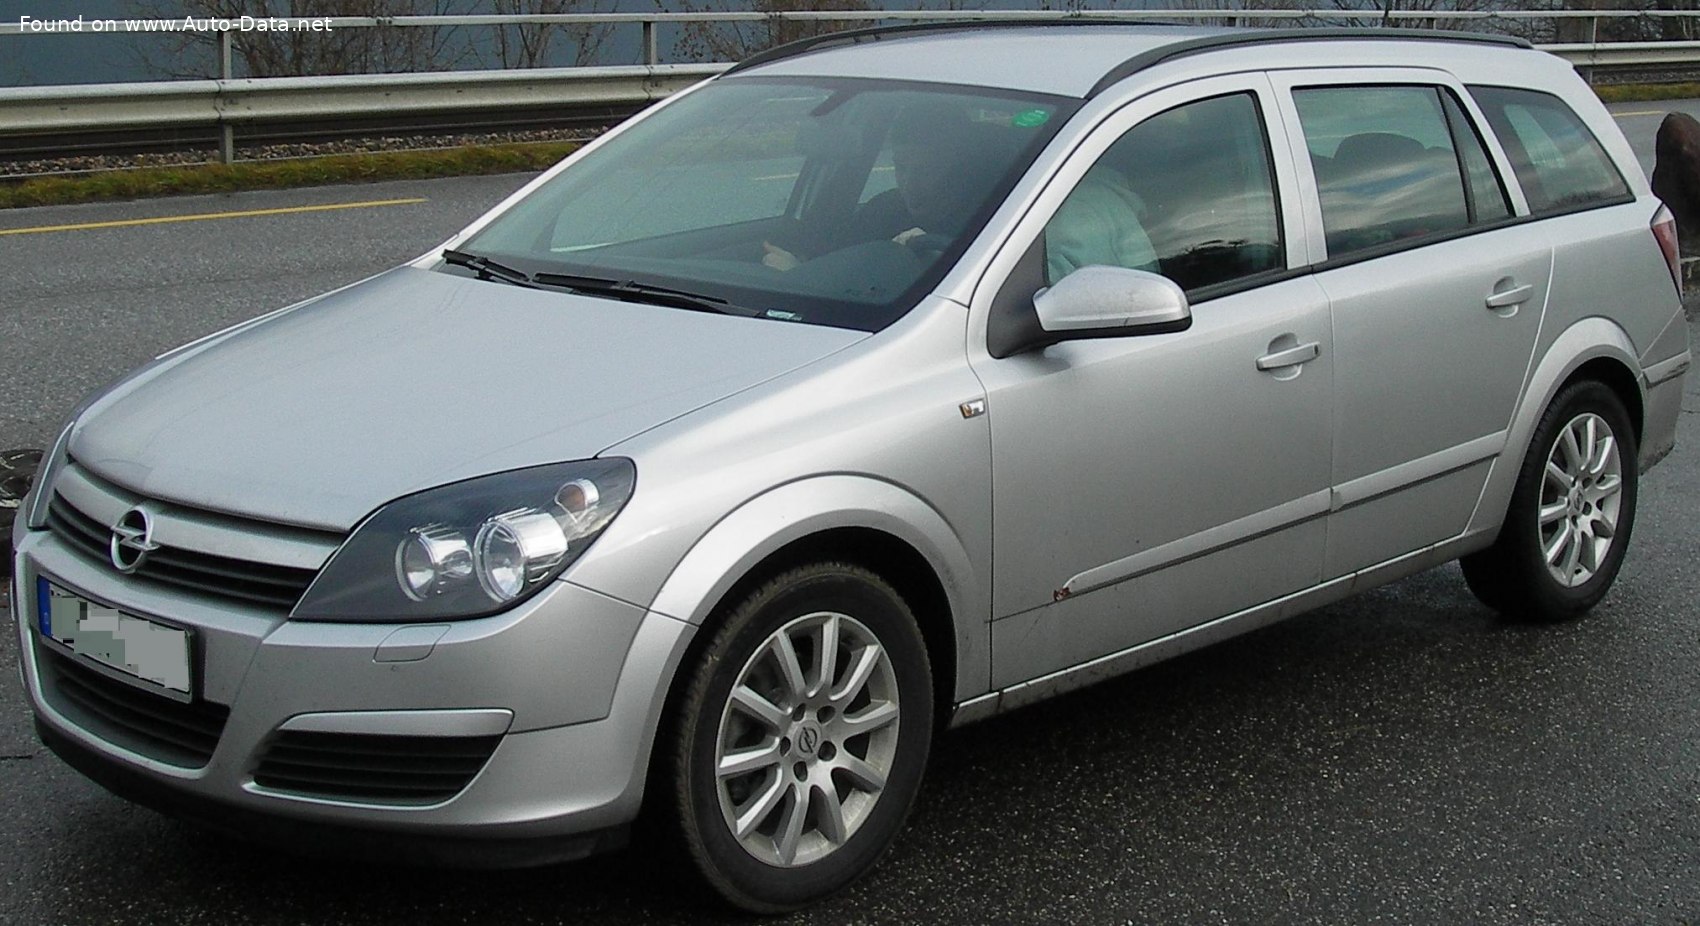 https://www.auto-data.net/images/f43/Opel-Astra-H-Caravan_2.jpg